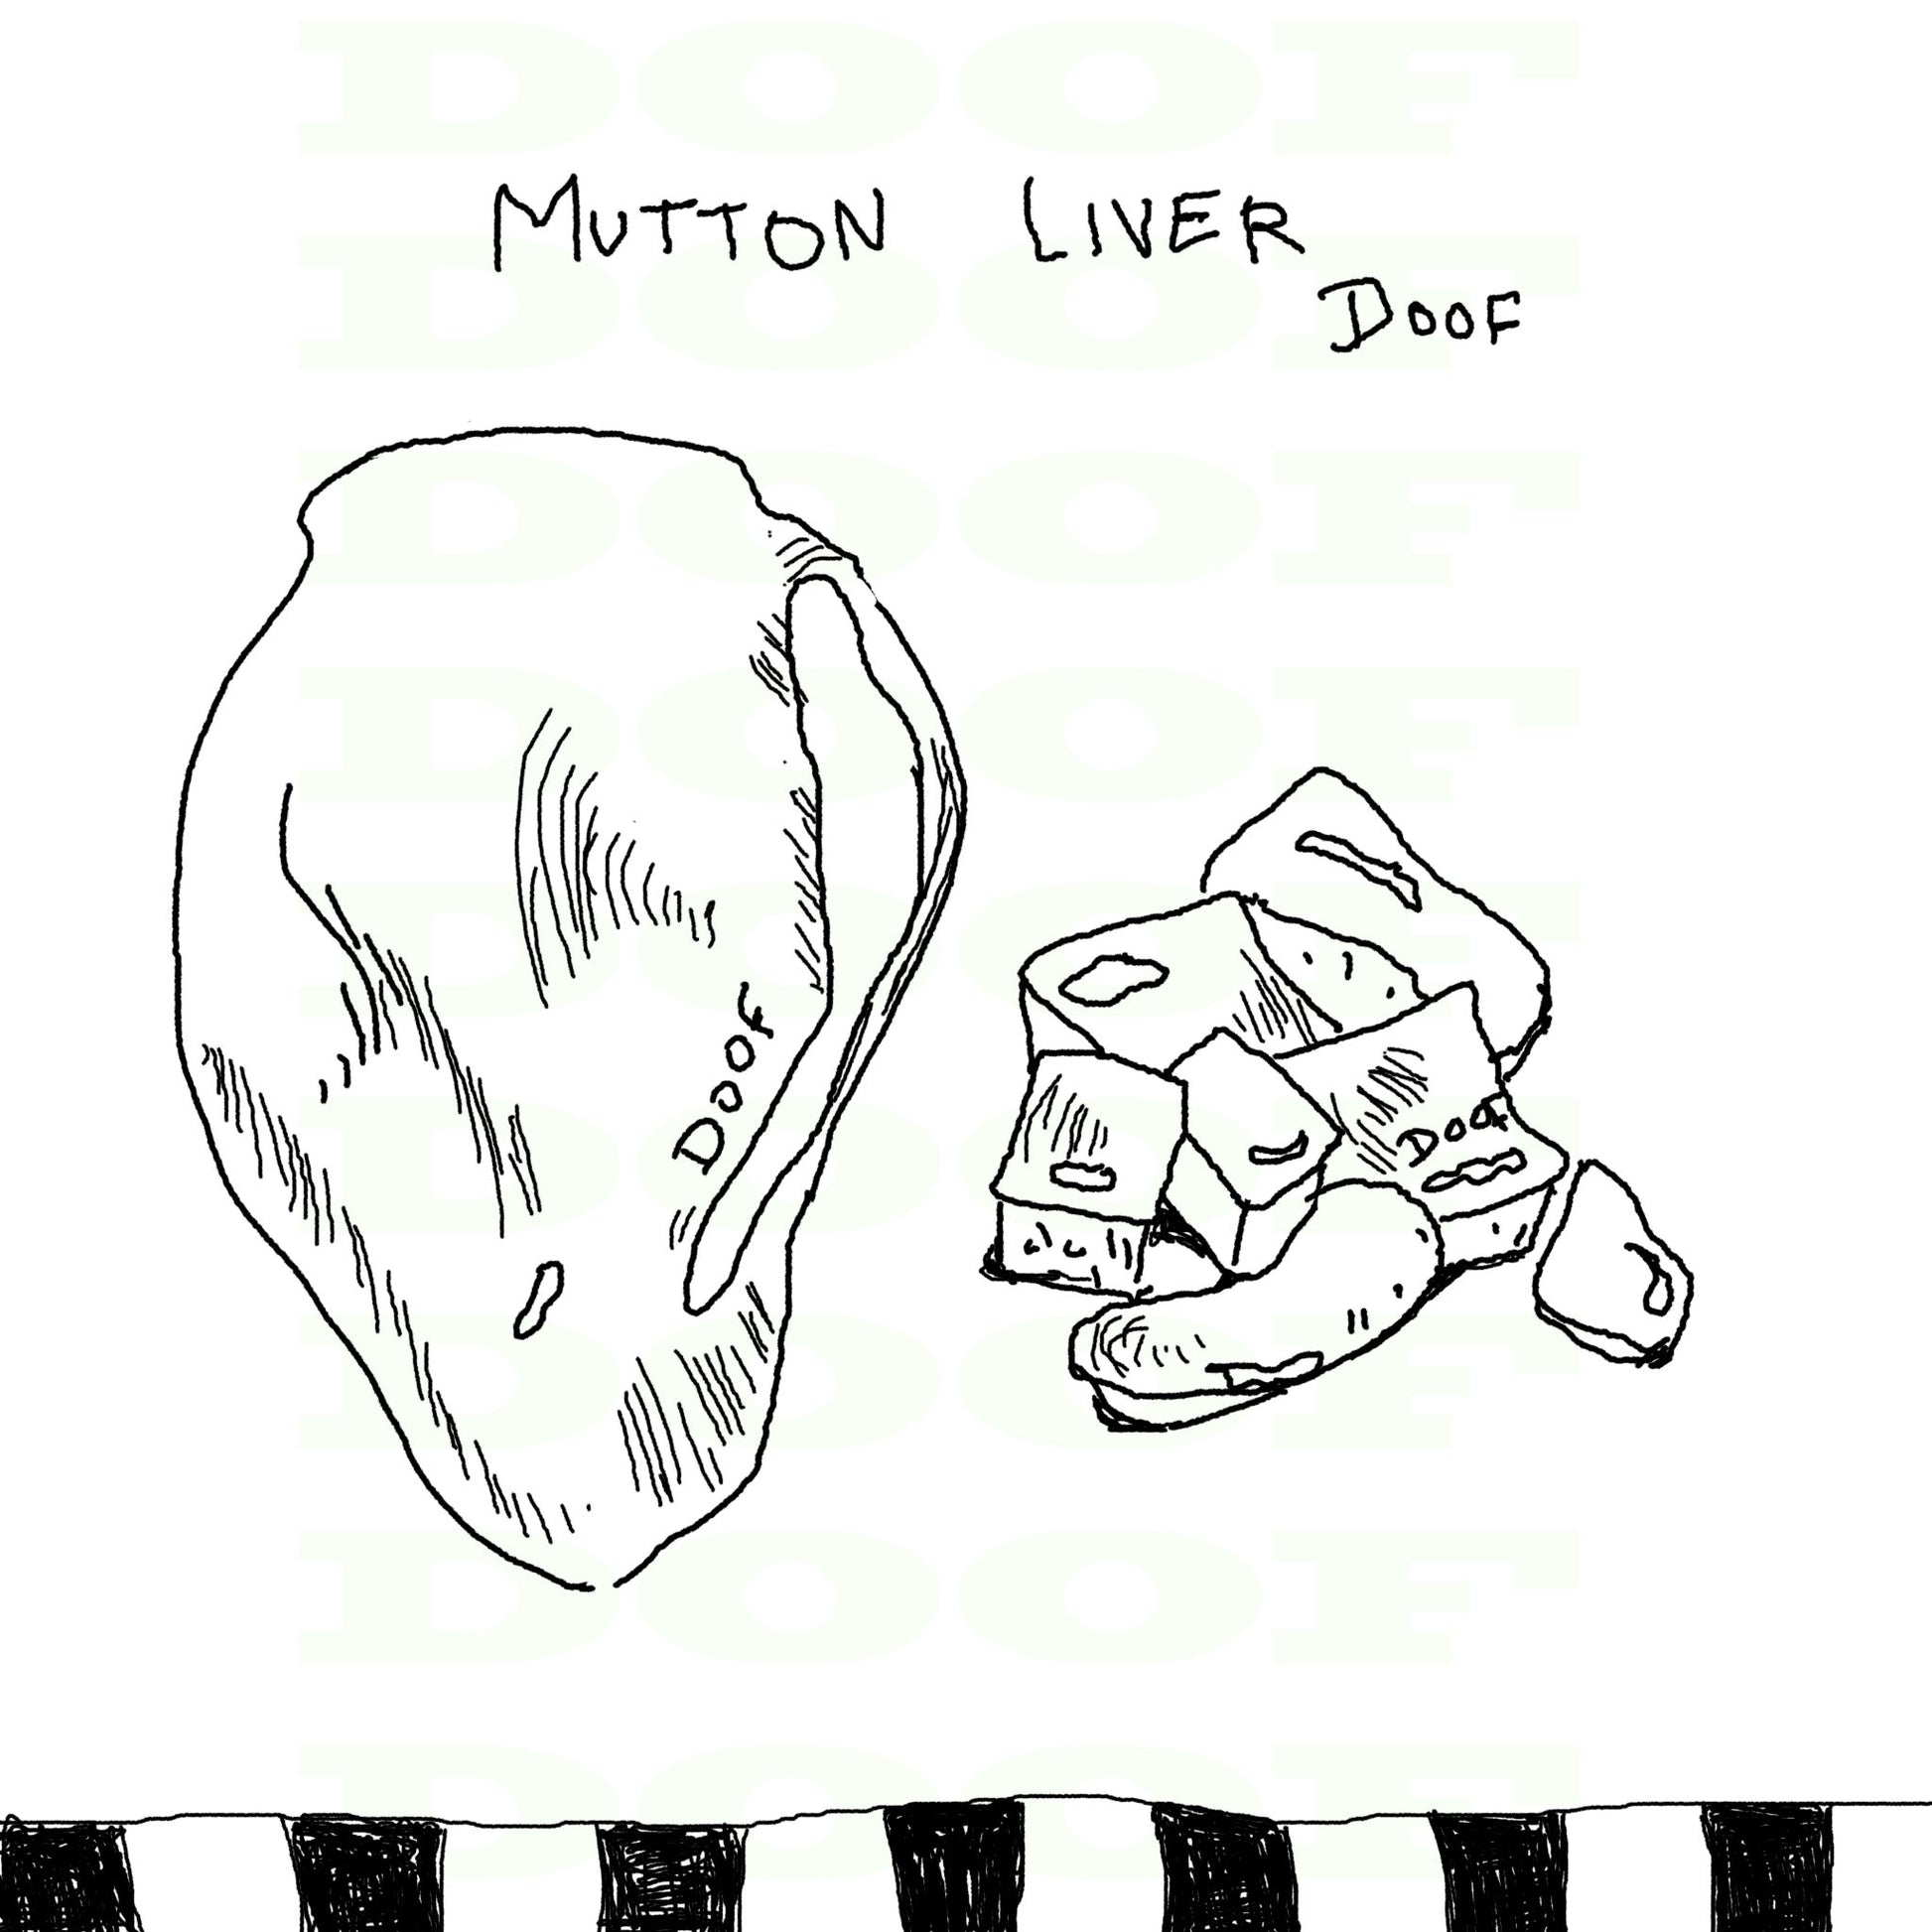 Mutton liver chops Doof sketch